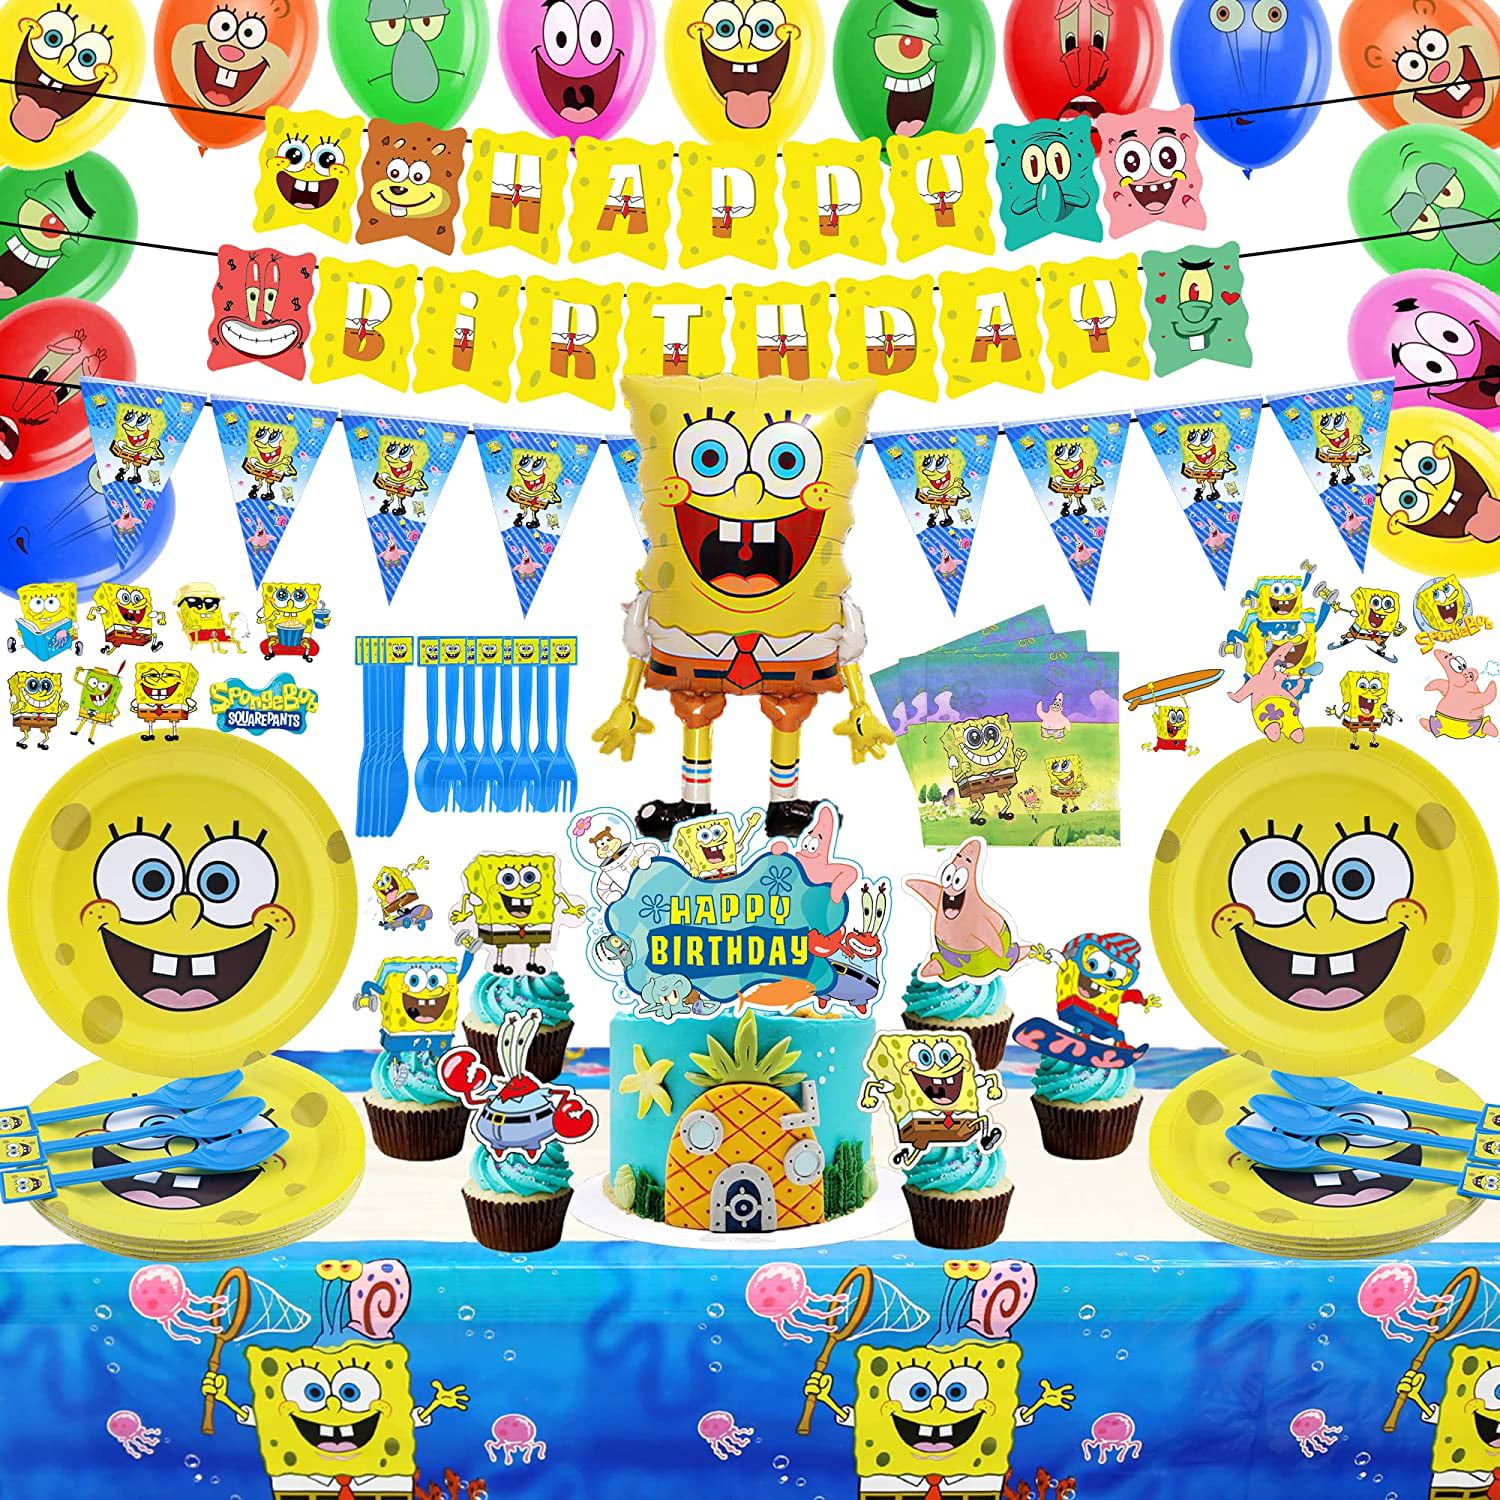 spongebob birthday banner